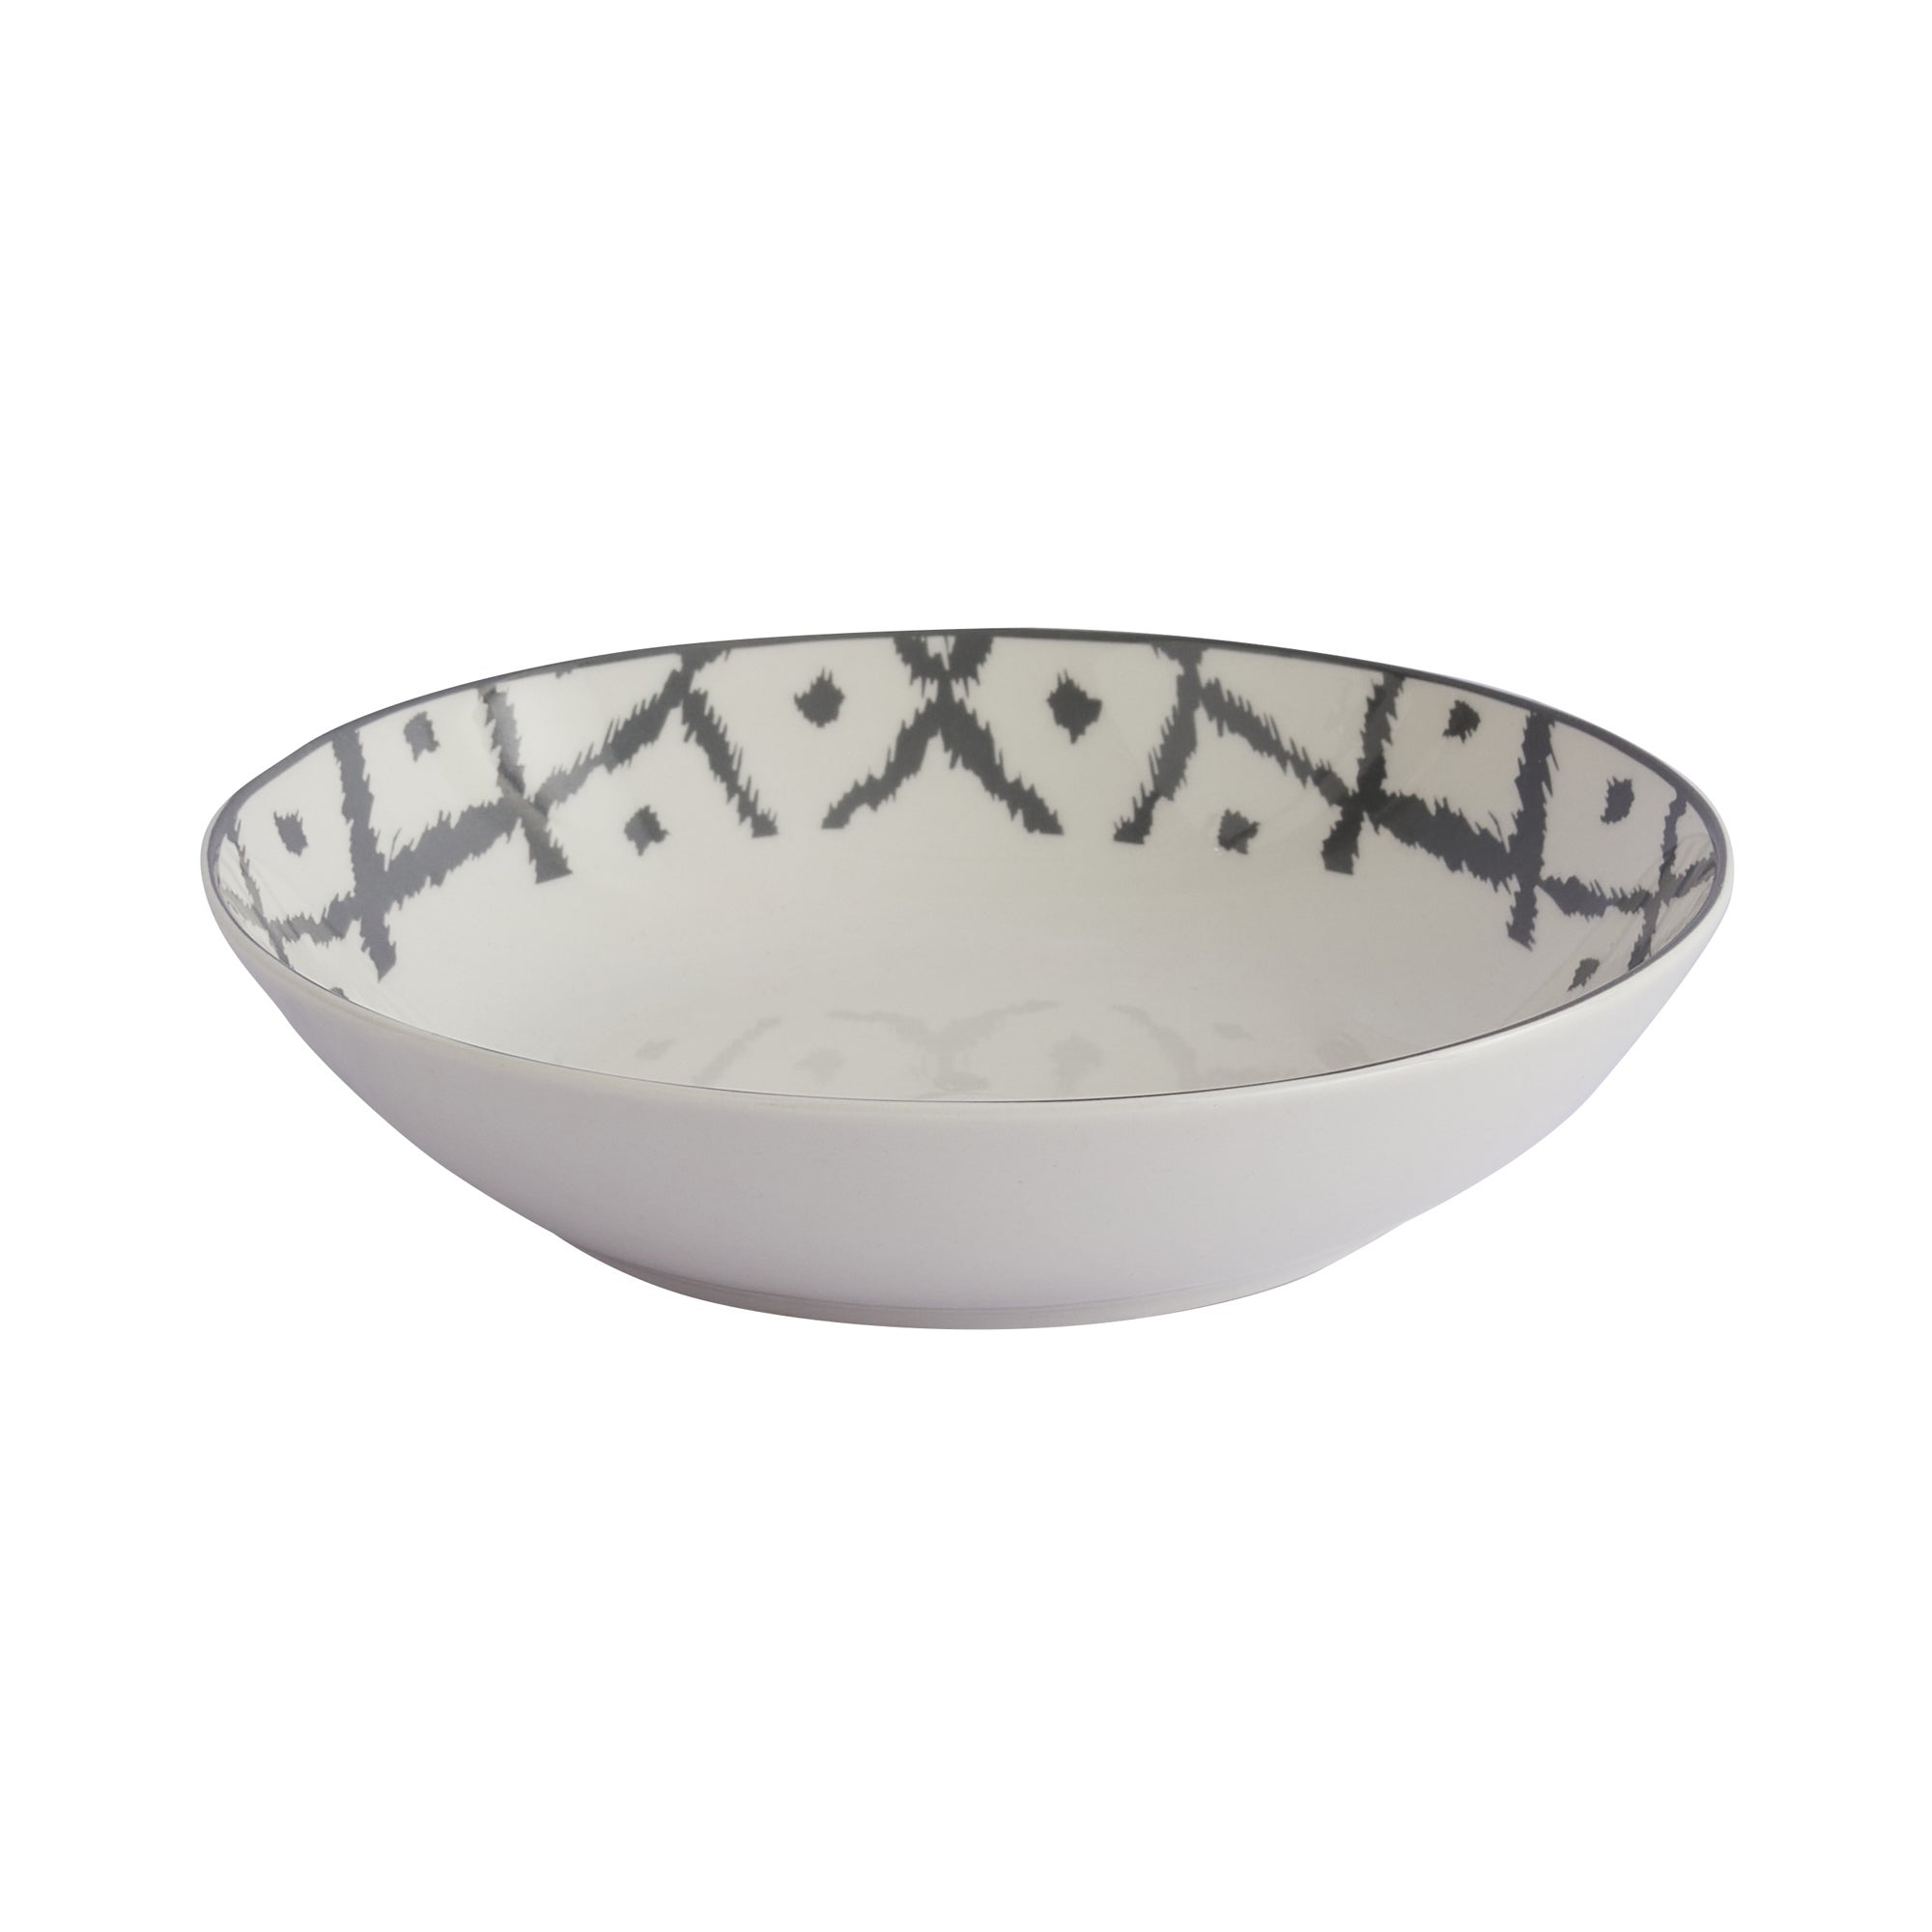 Ikat Porcelain Pasta Bowl Charcoalwhite